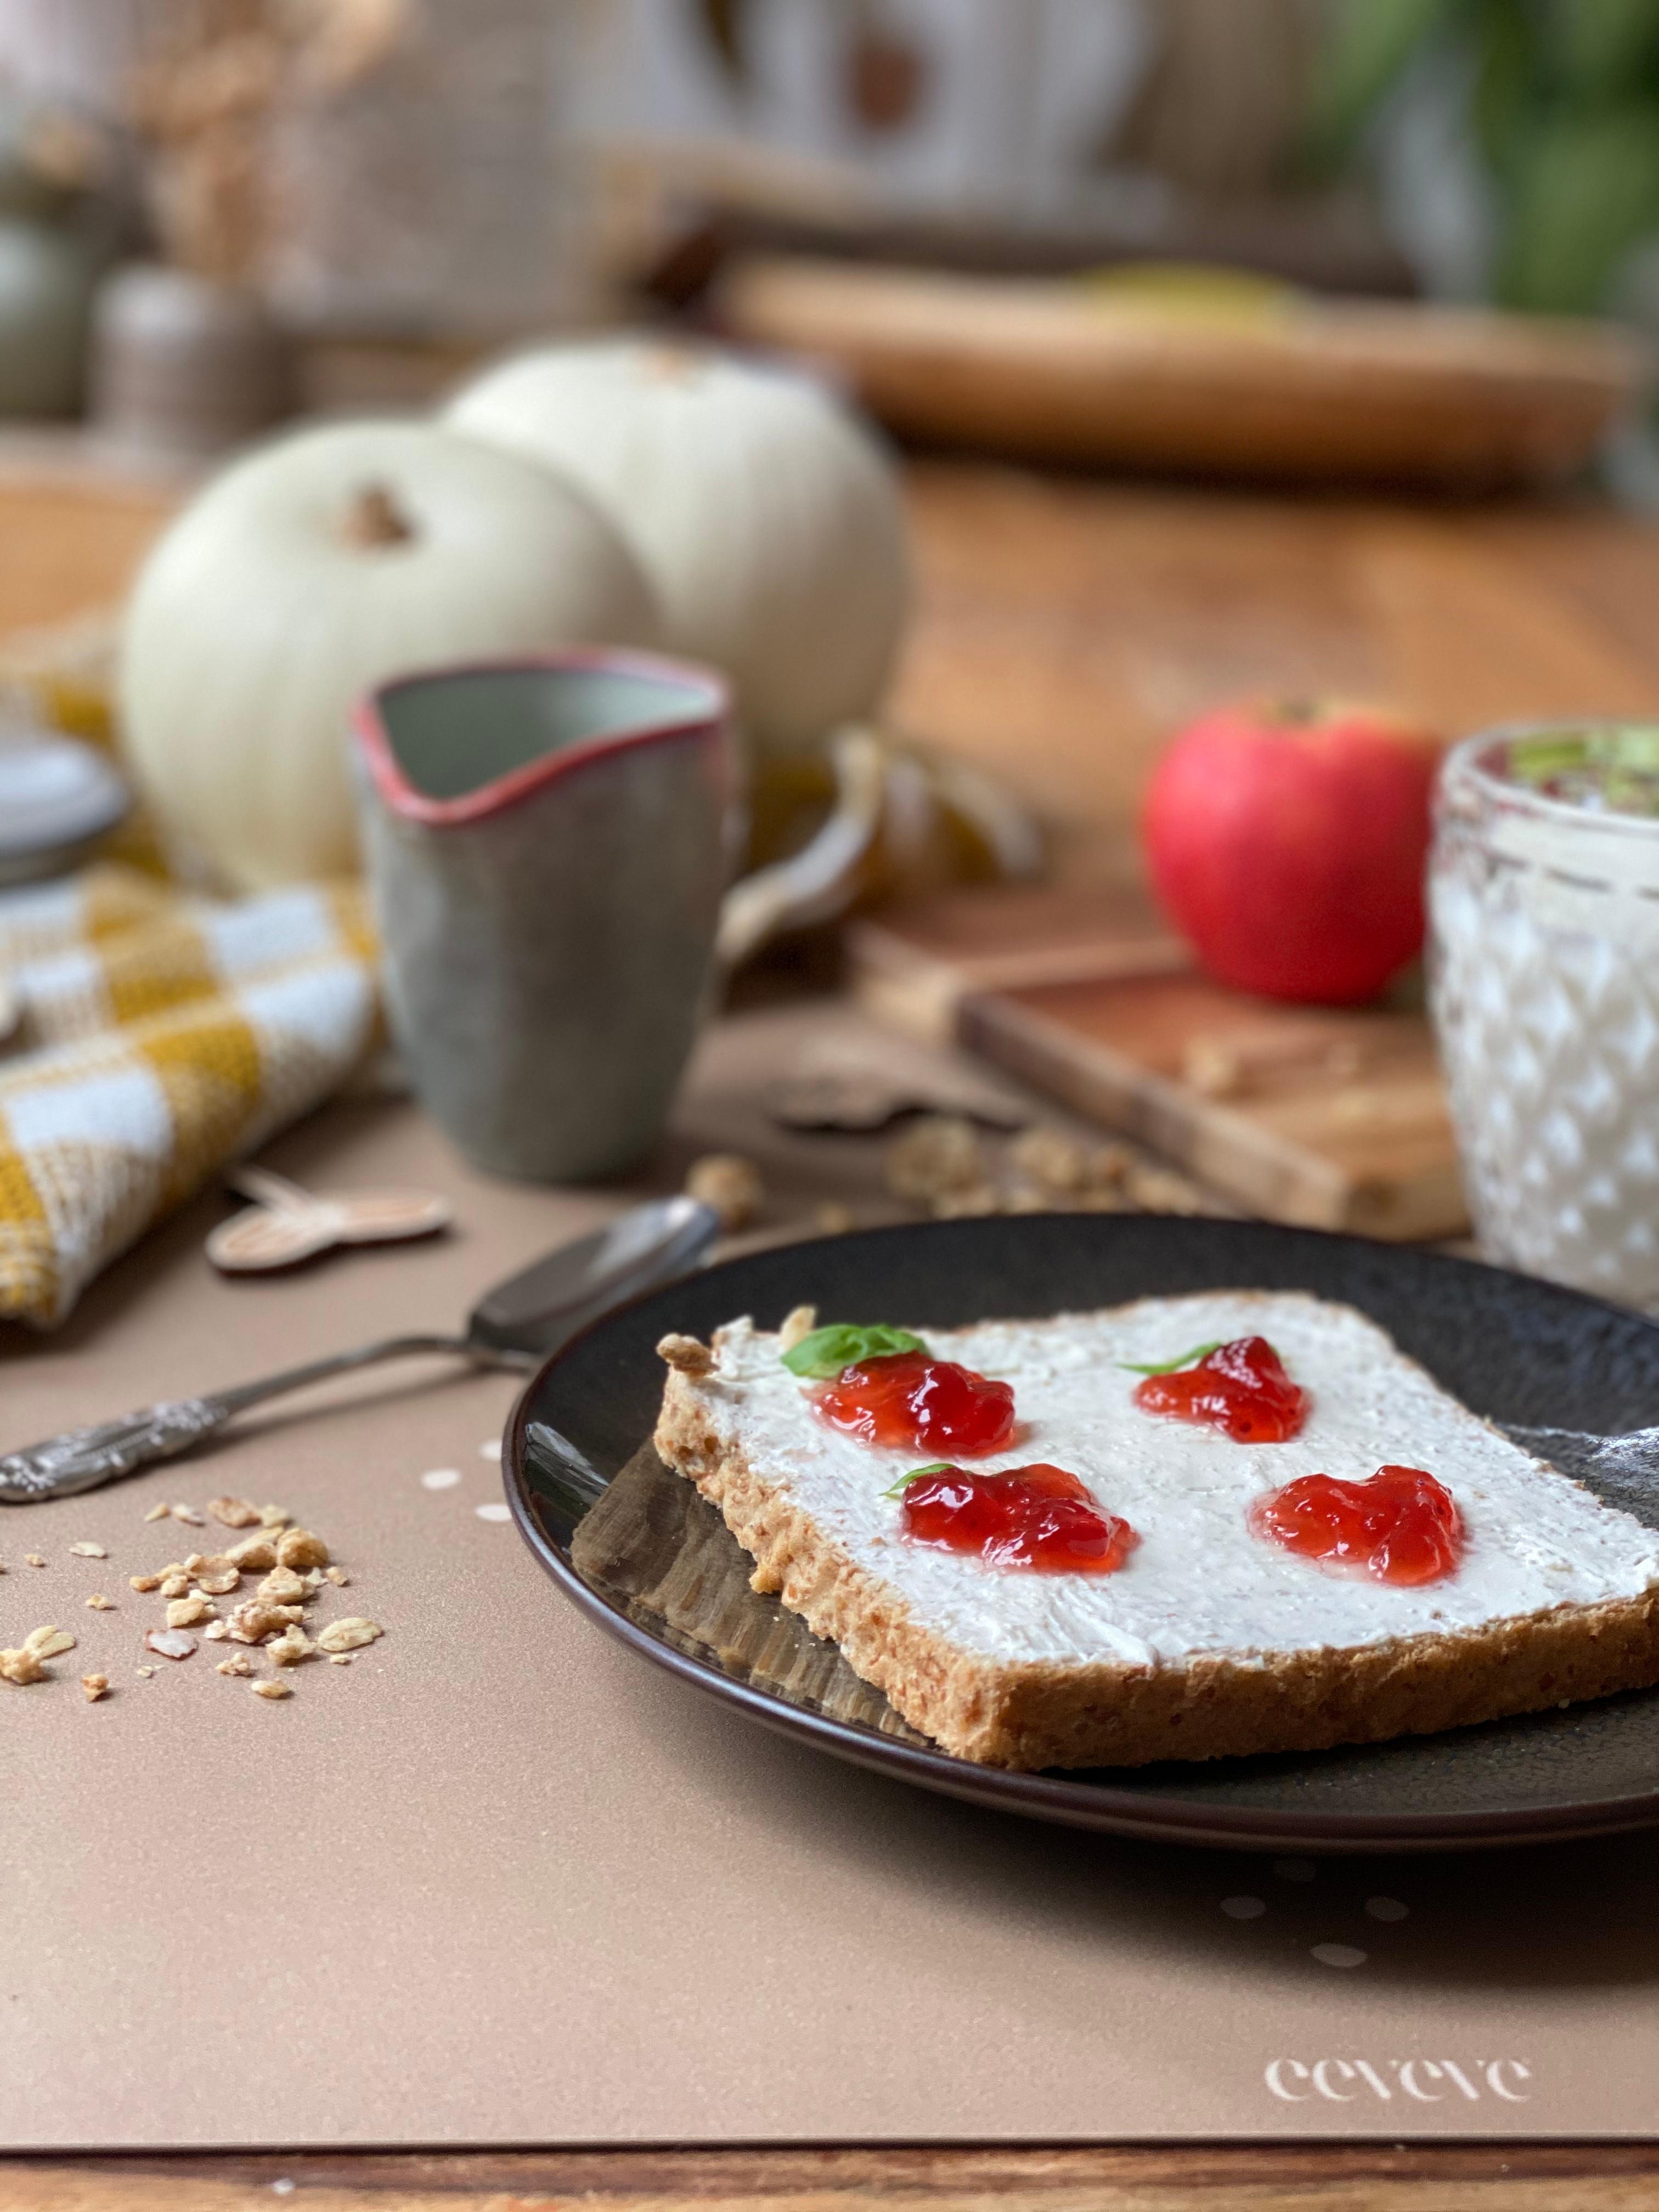 #fruehstueck #breakfast #essen #essenundtrinken #toast #essenfuerkids #morning